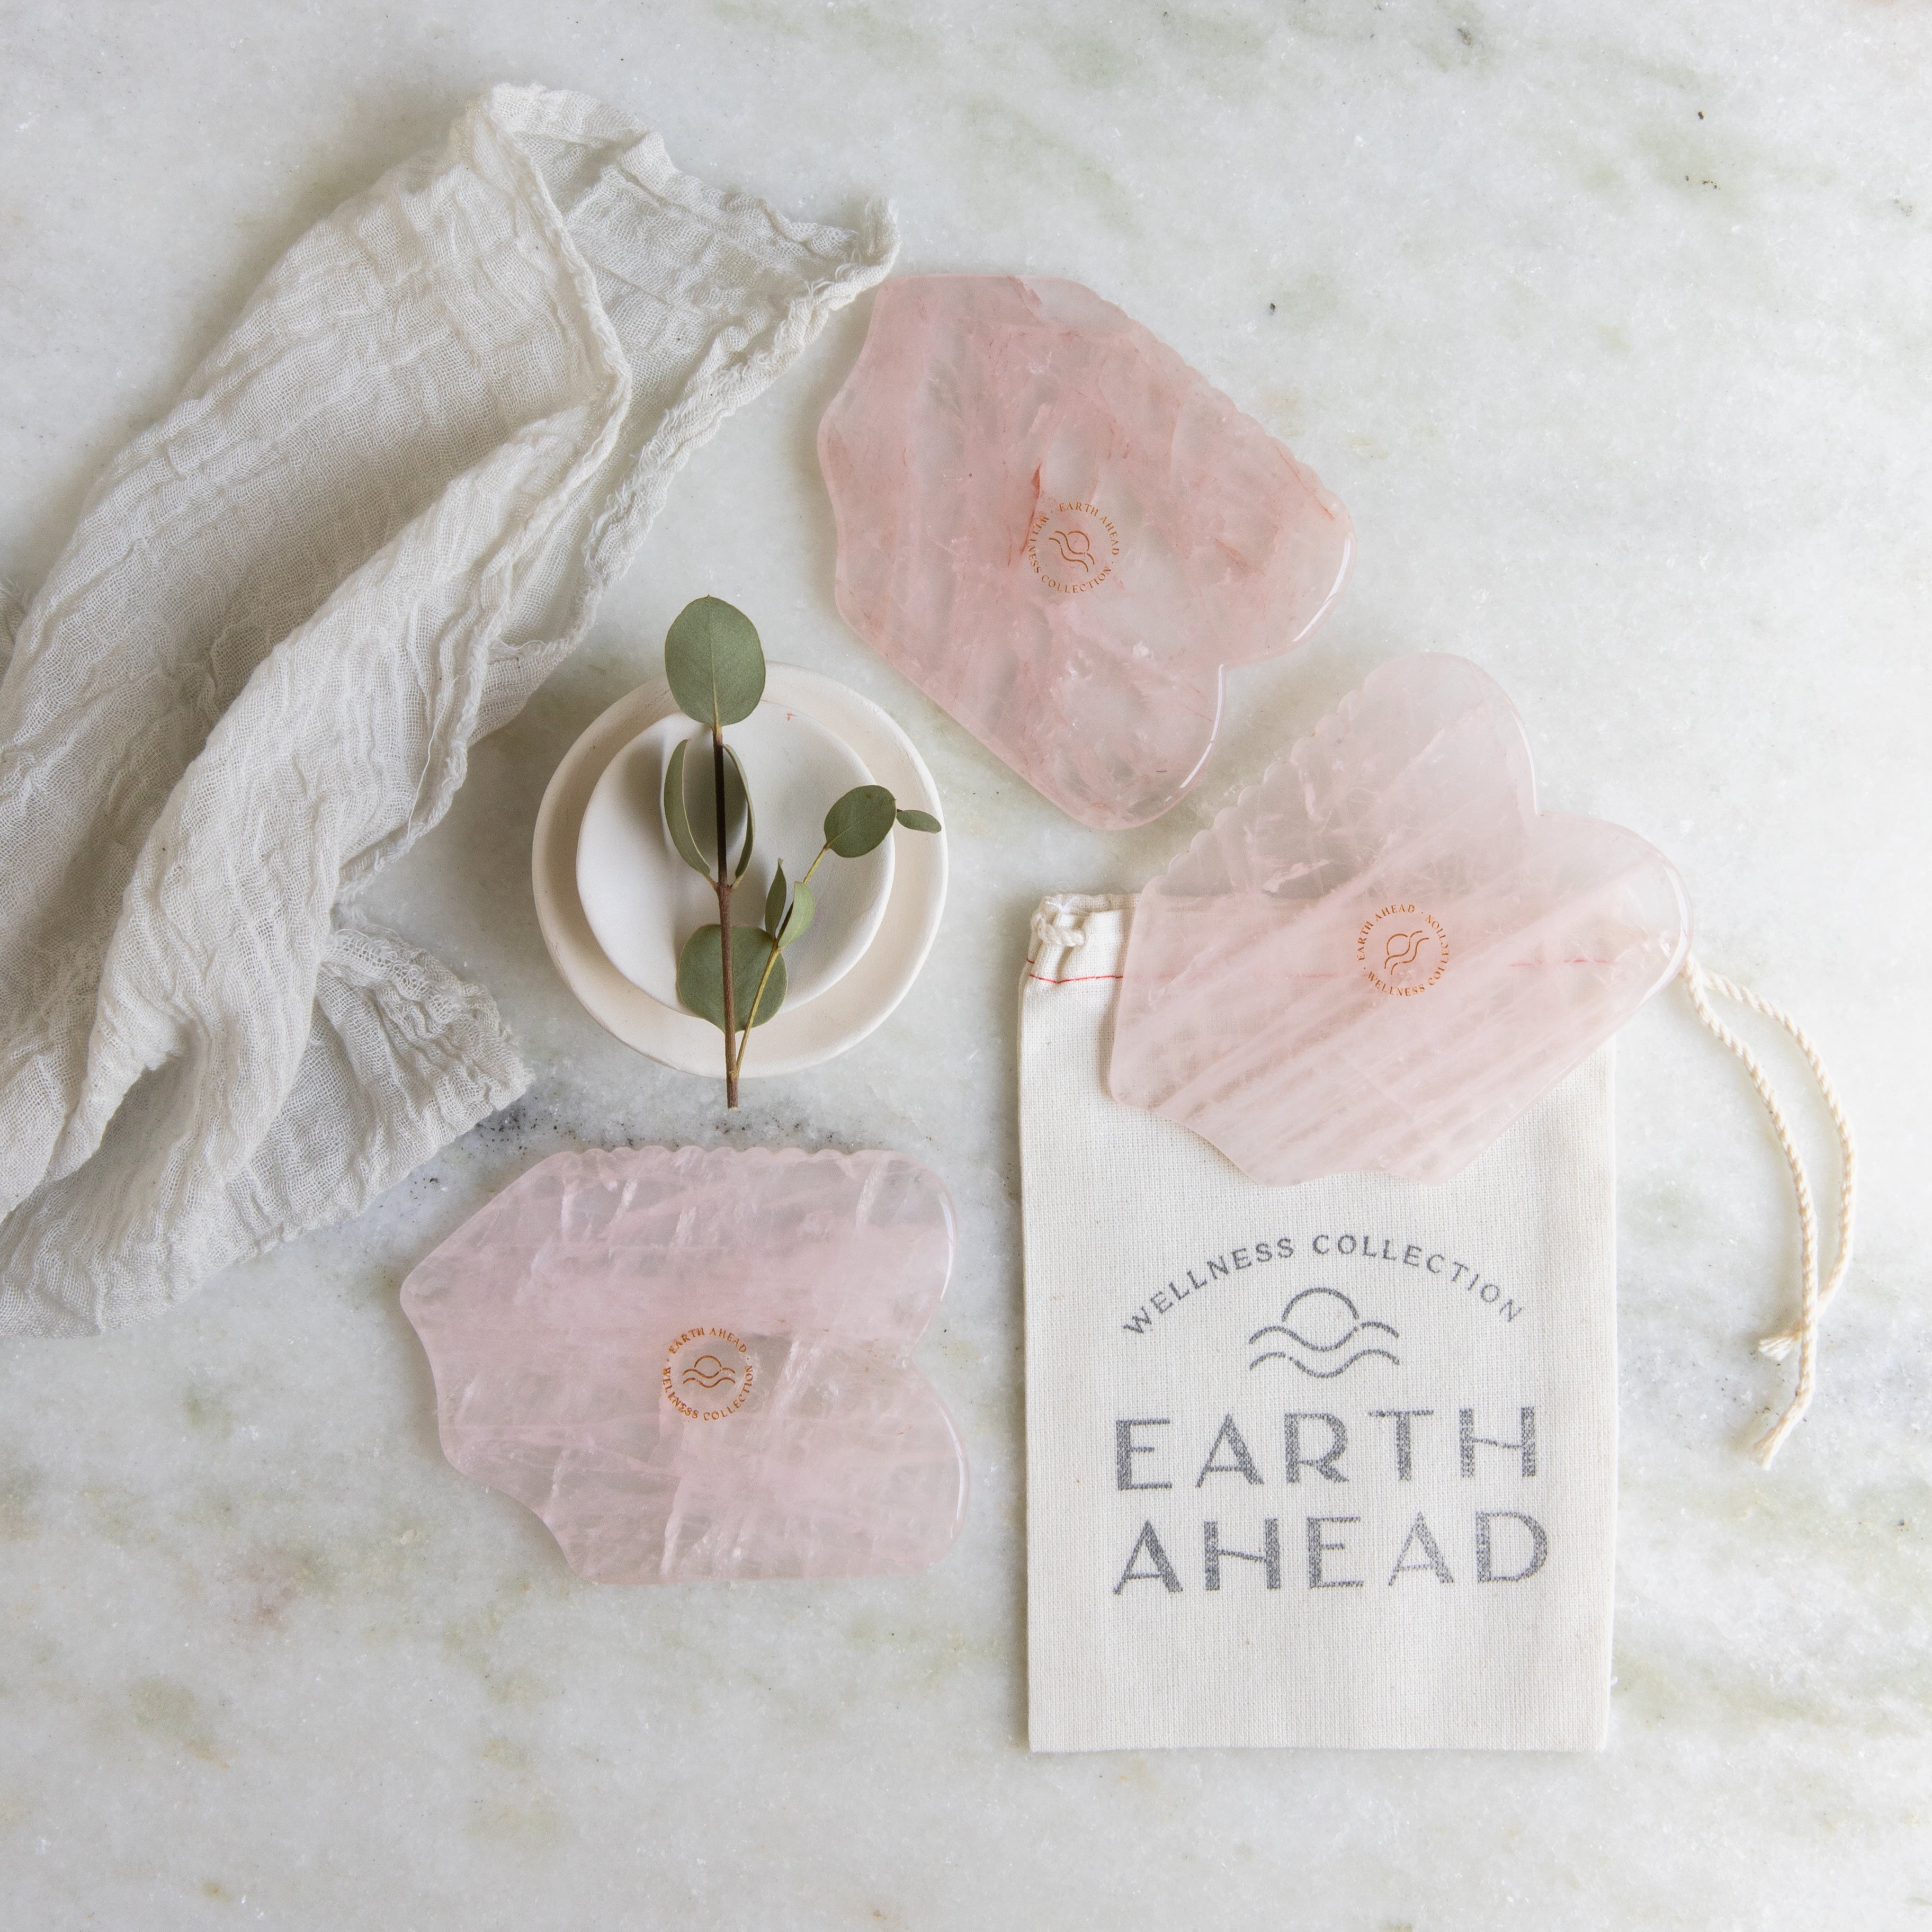 Rose quarts fgua sha stones in plastic-free packaging